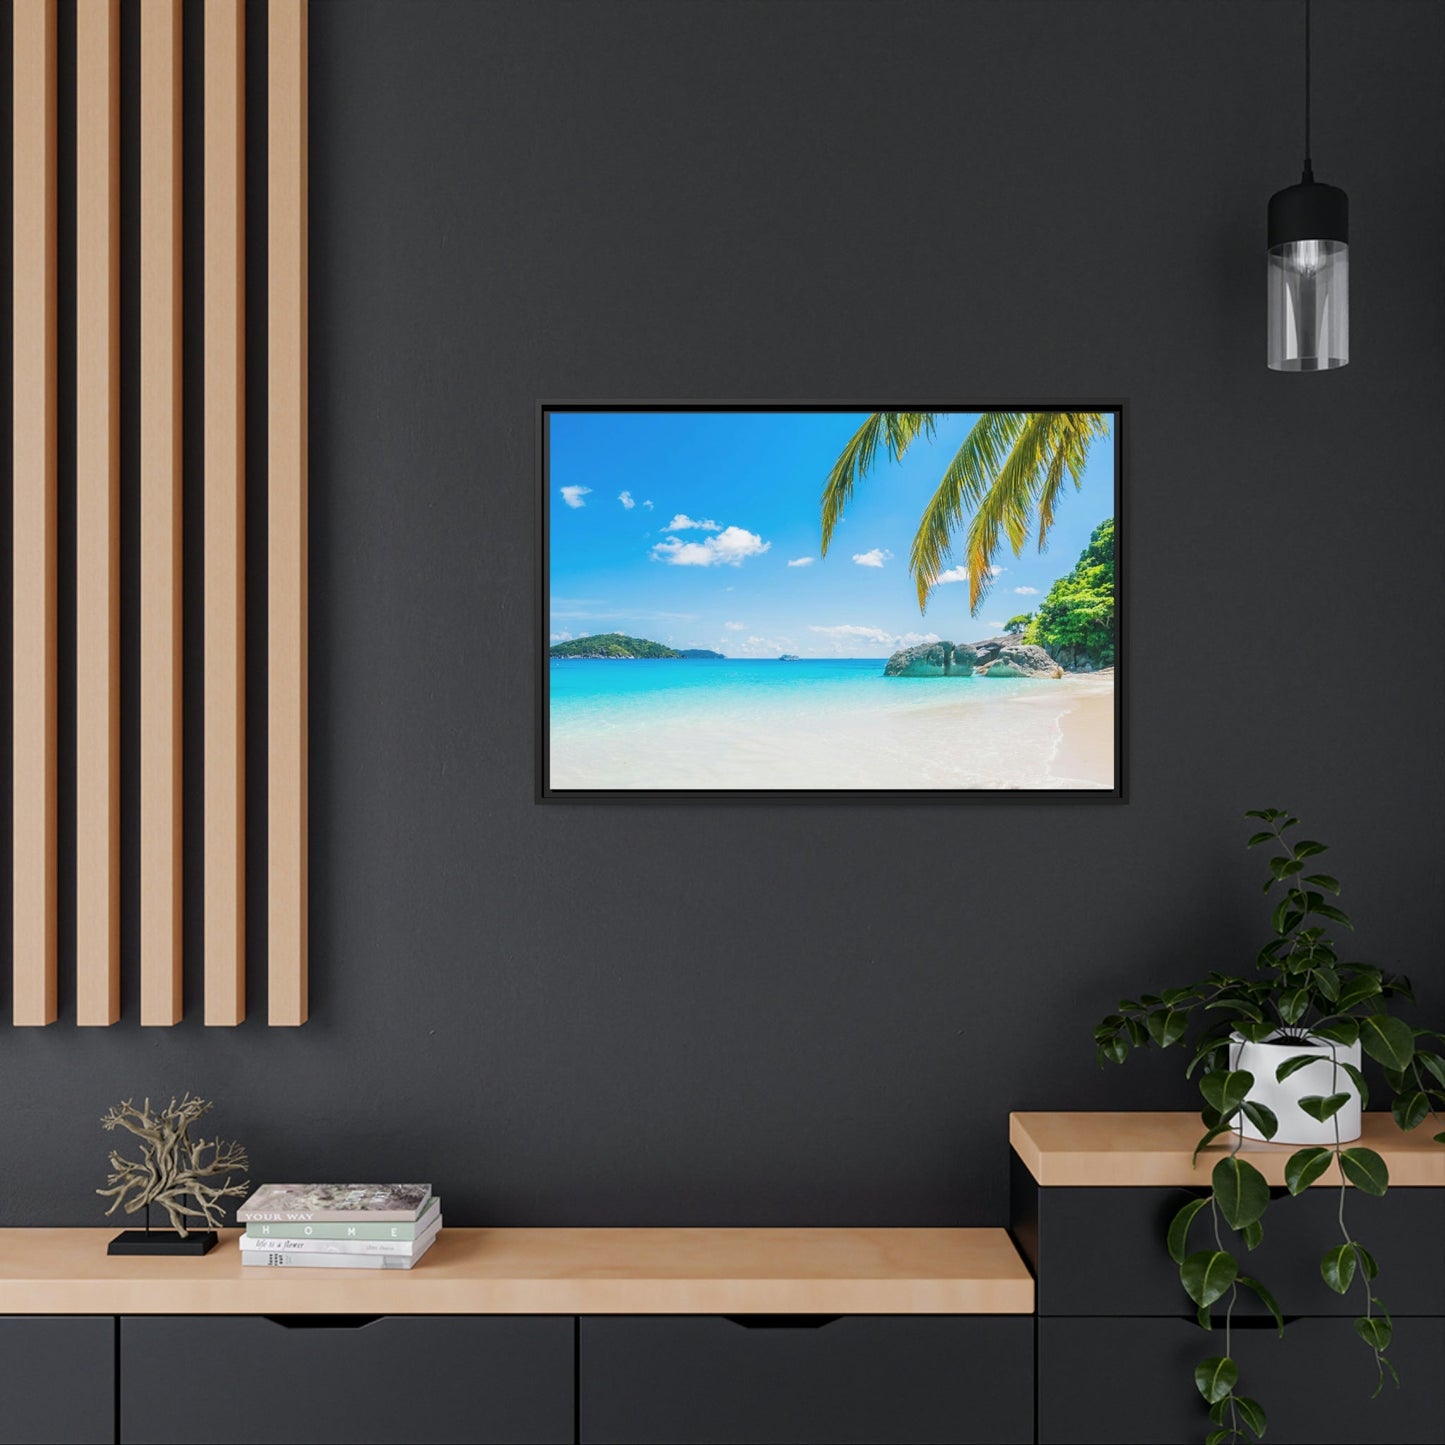 Seaside Escape: Framed Canvas & Poster of a Dreamy Island Beach Getaway